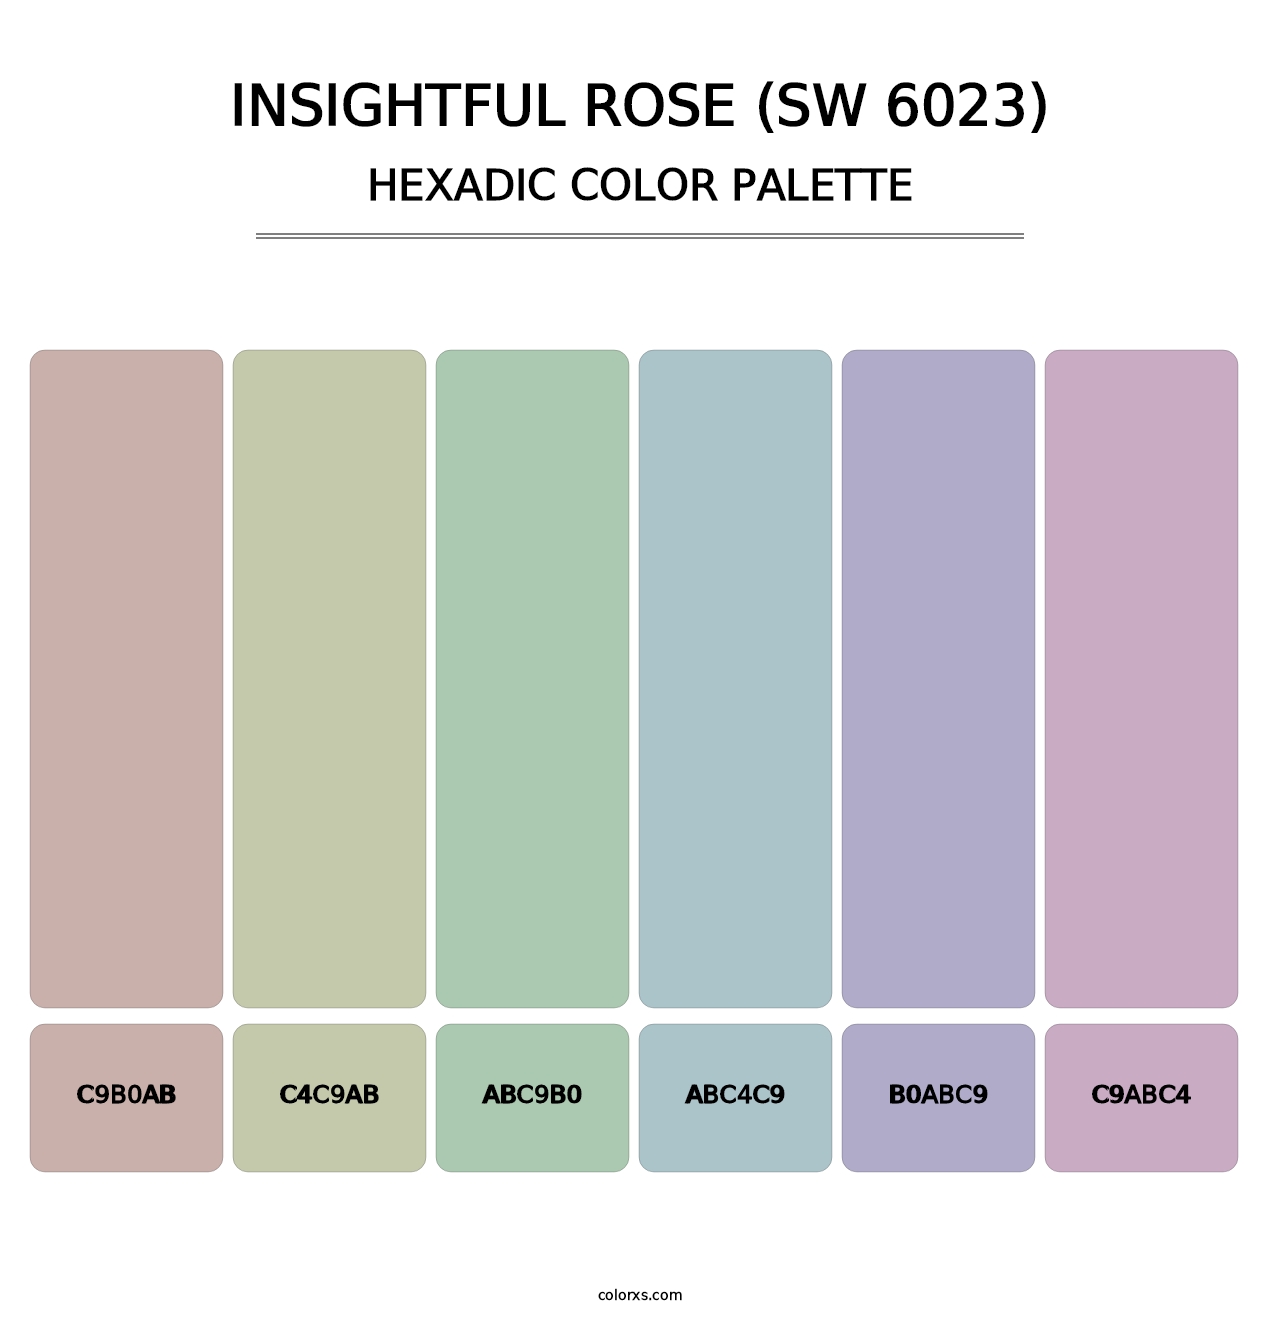 Insightful Rose (SW 6023) - Hexadic Color Palette